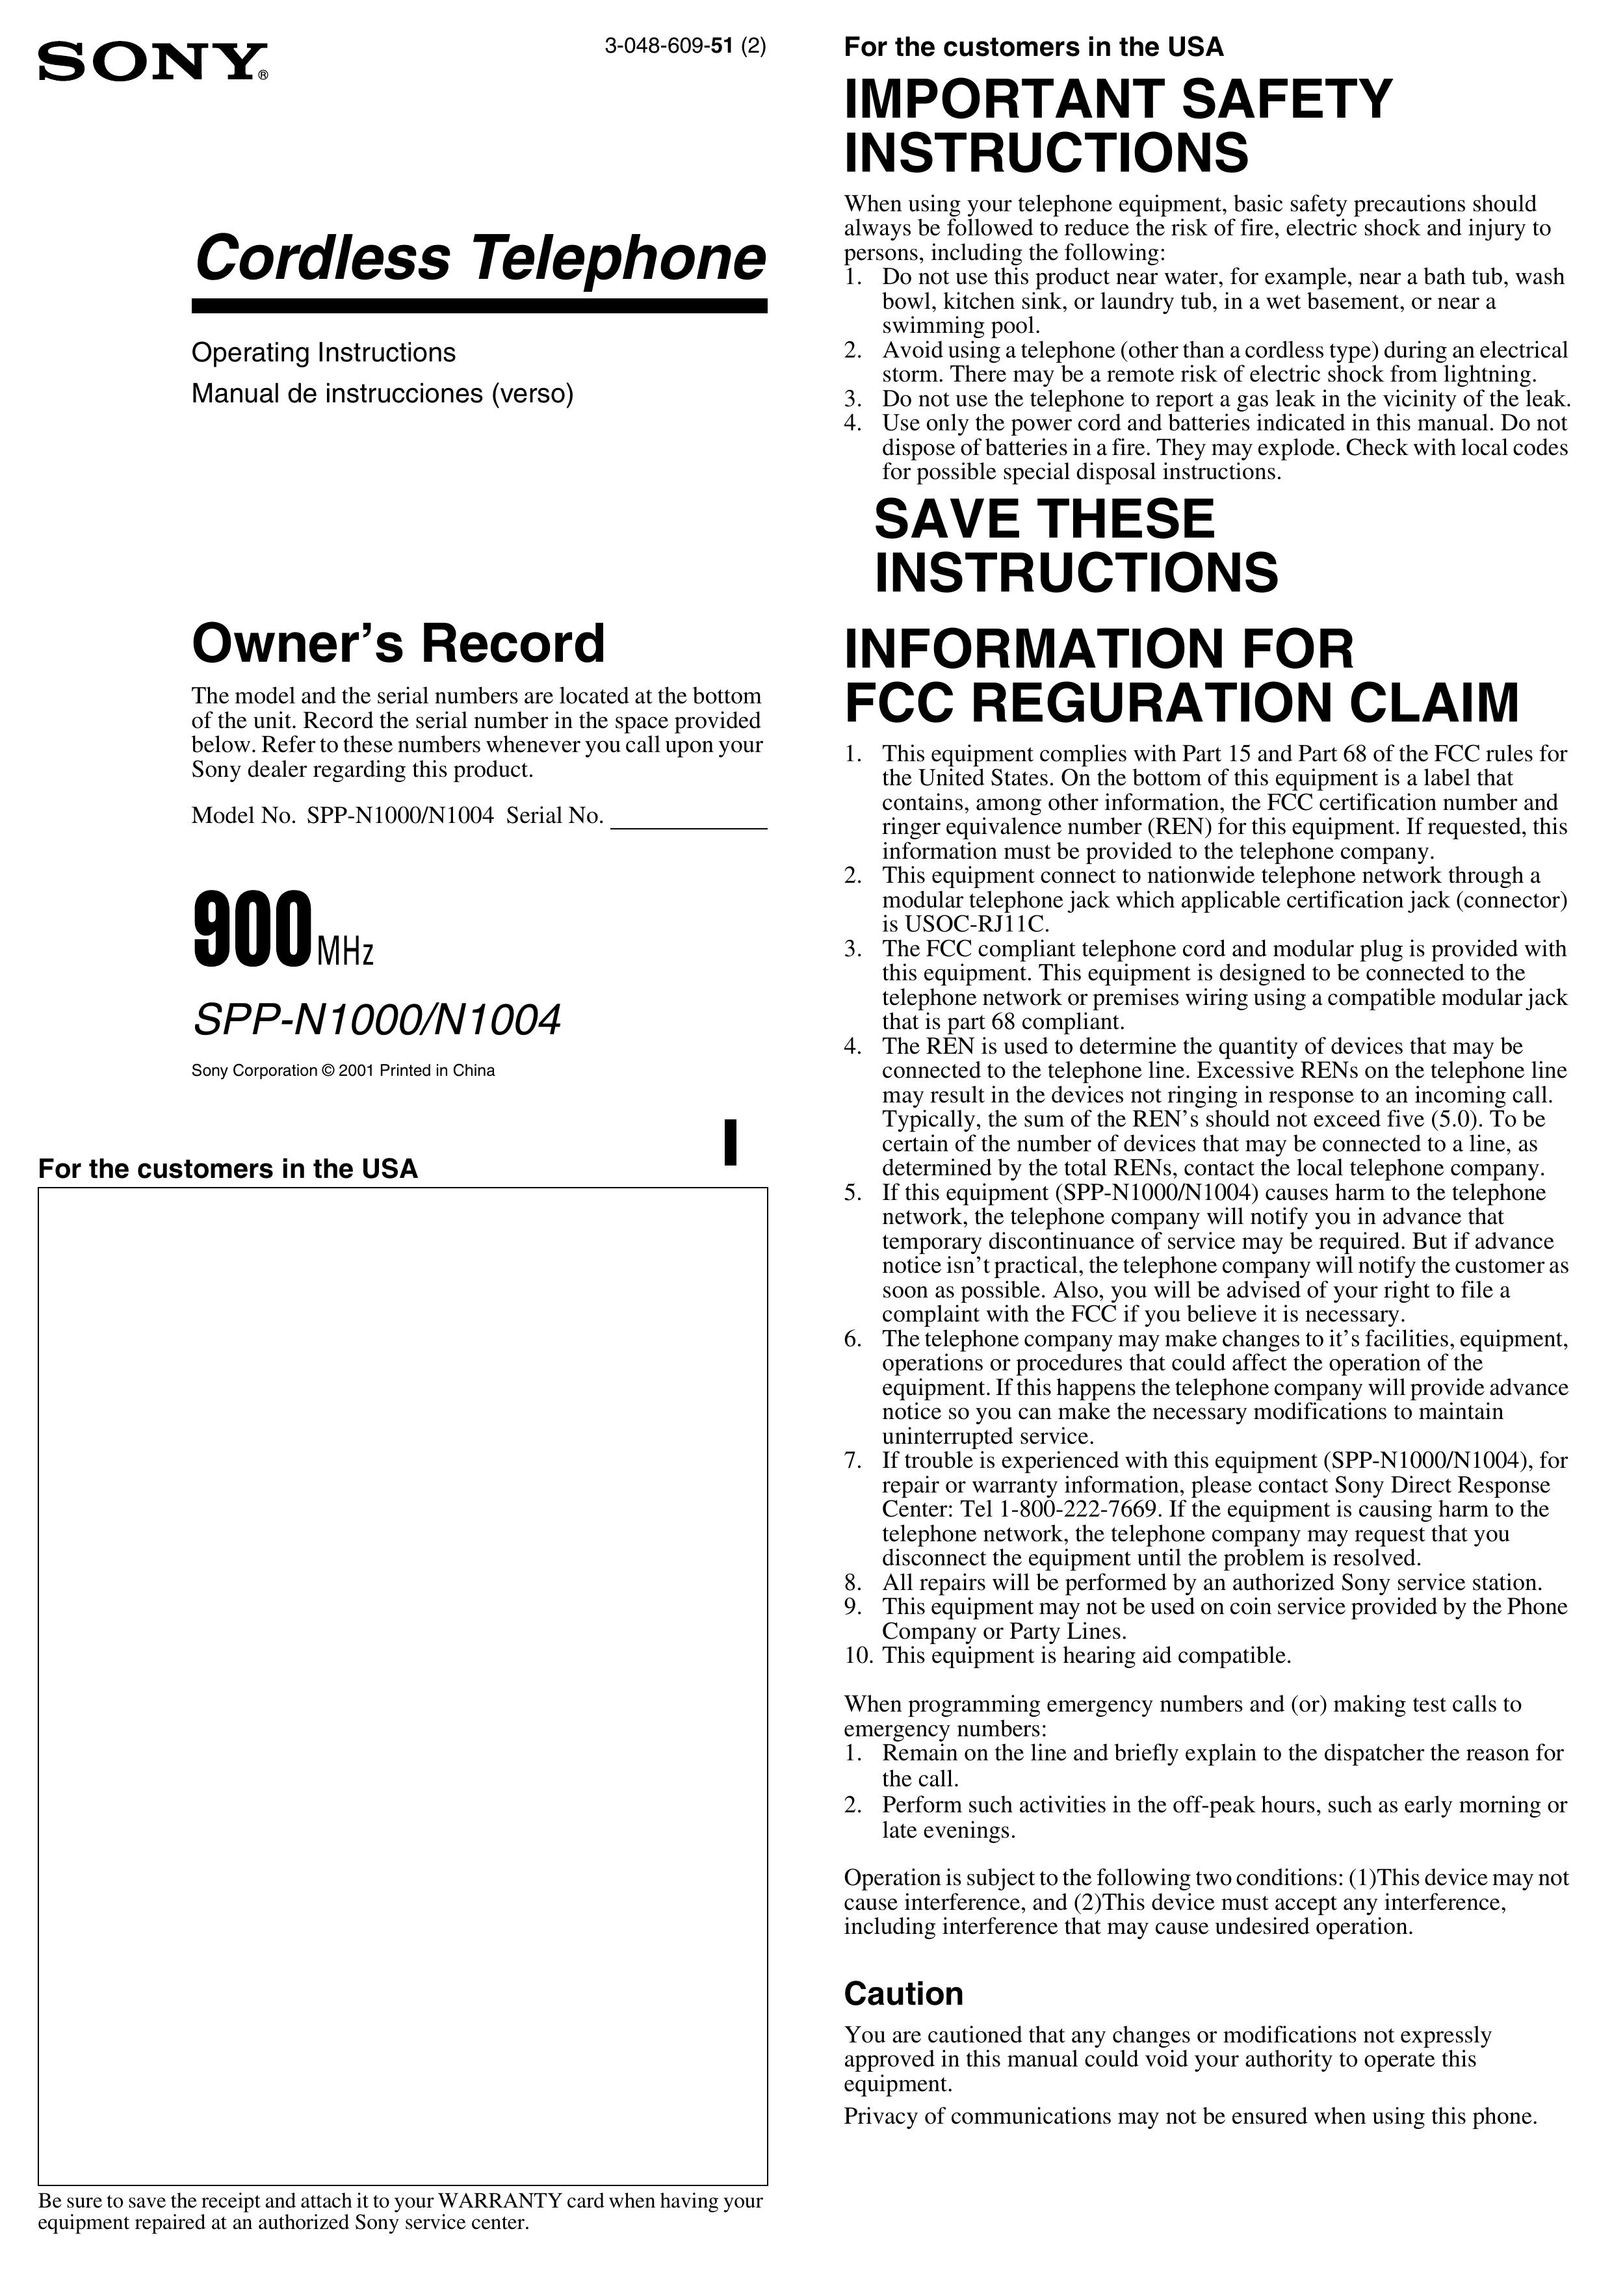 Sony SPP-N1000 Cordless Telephone User Manual